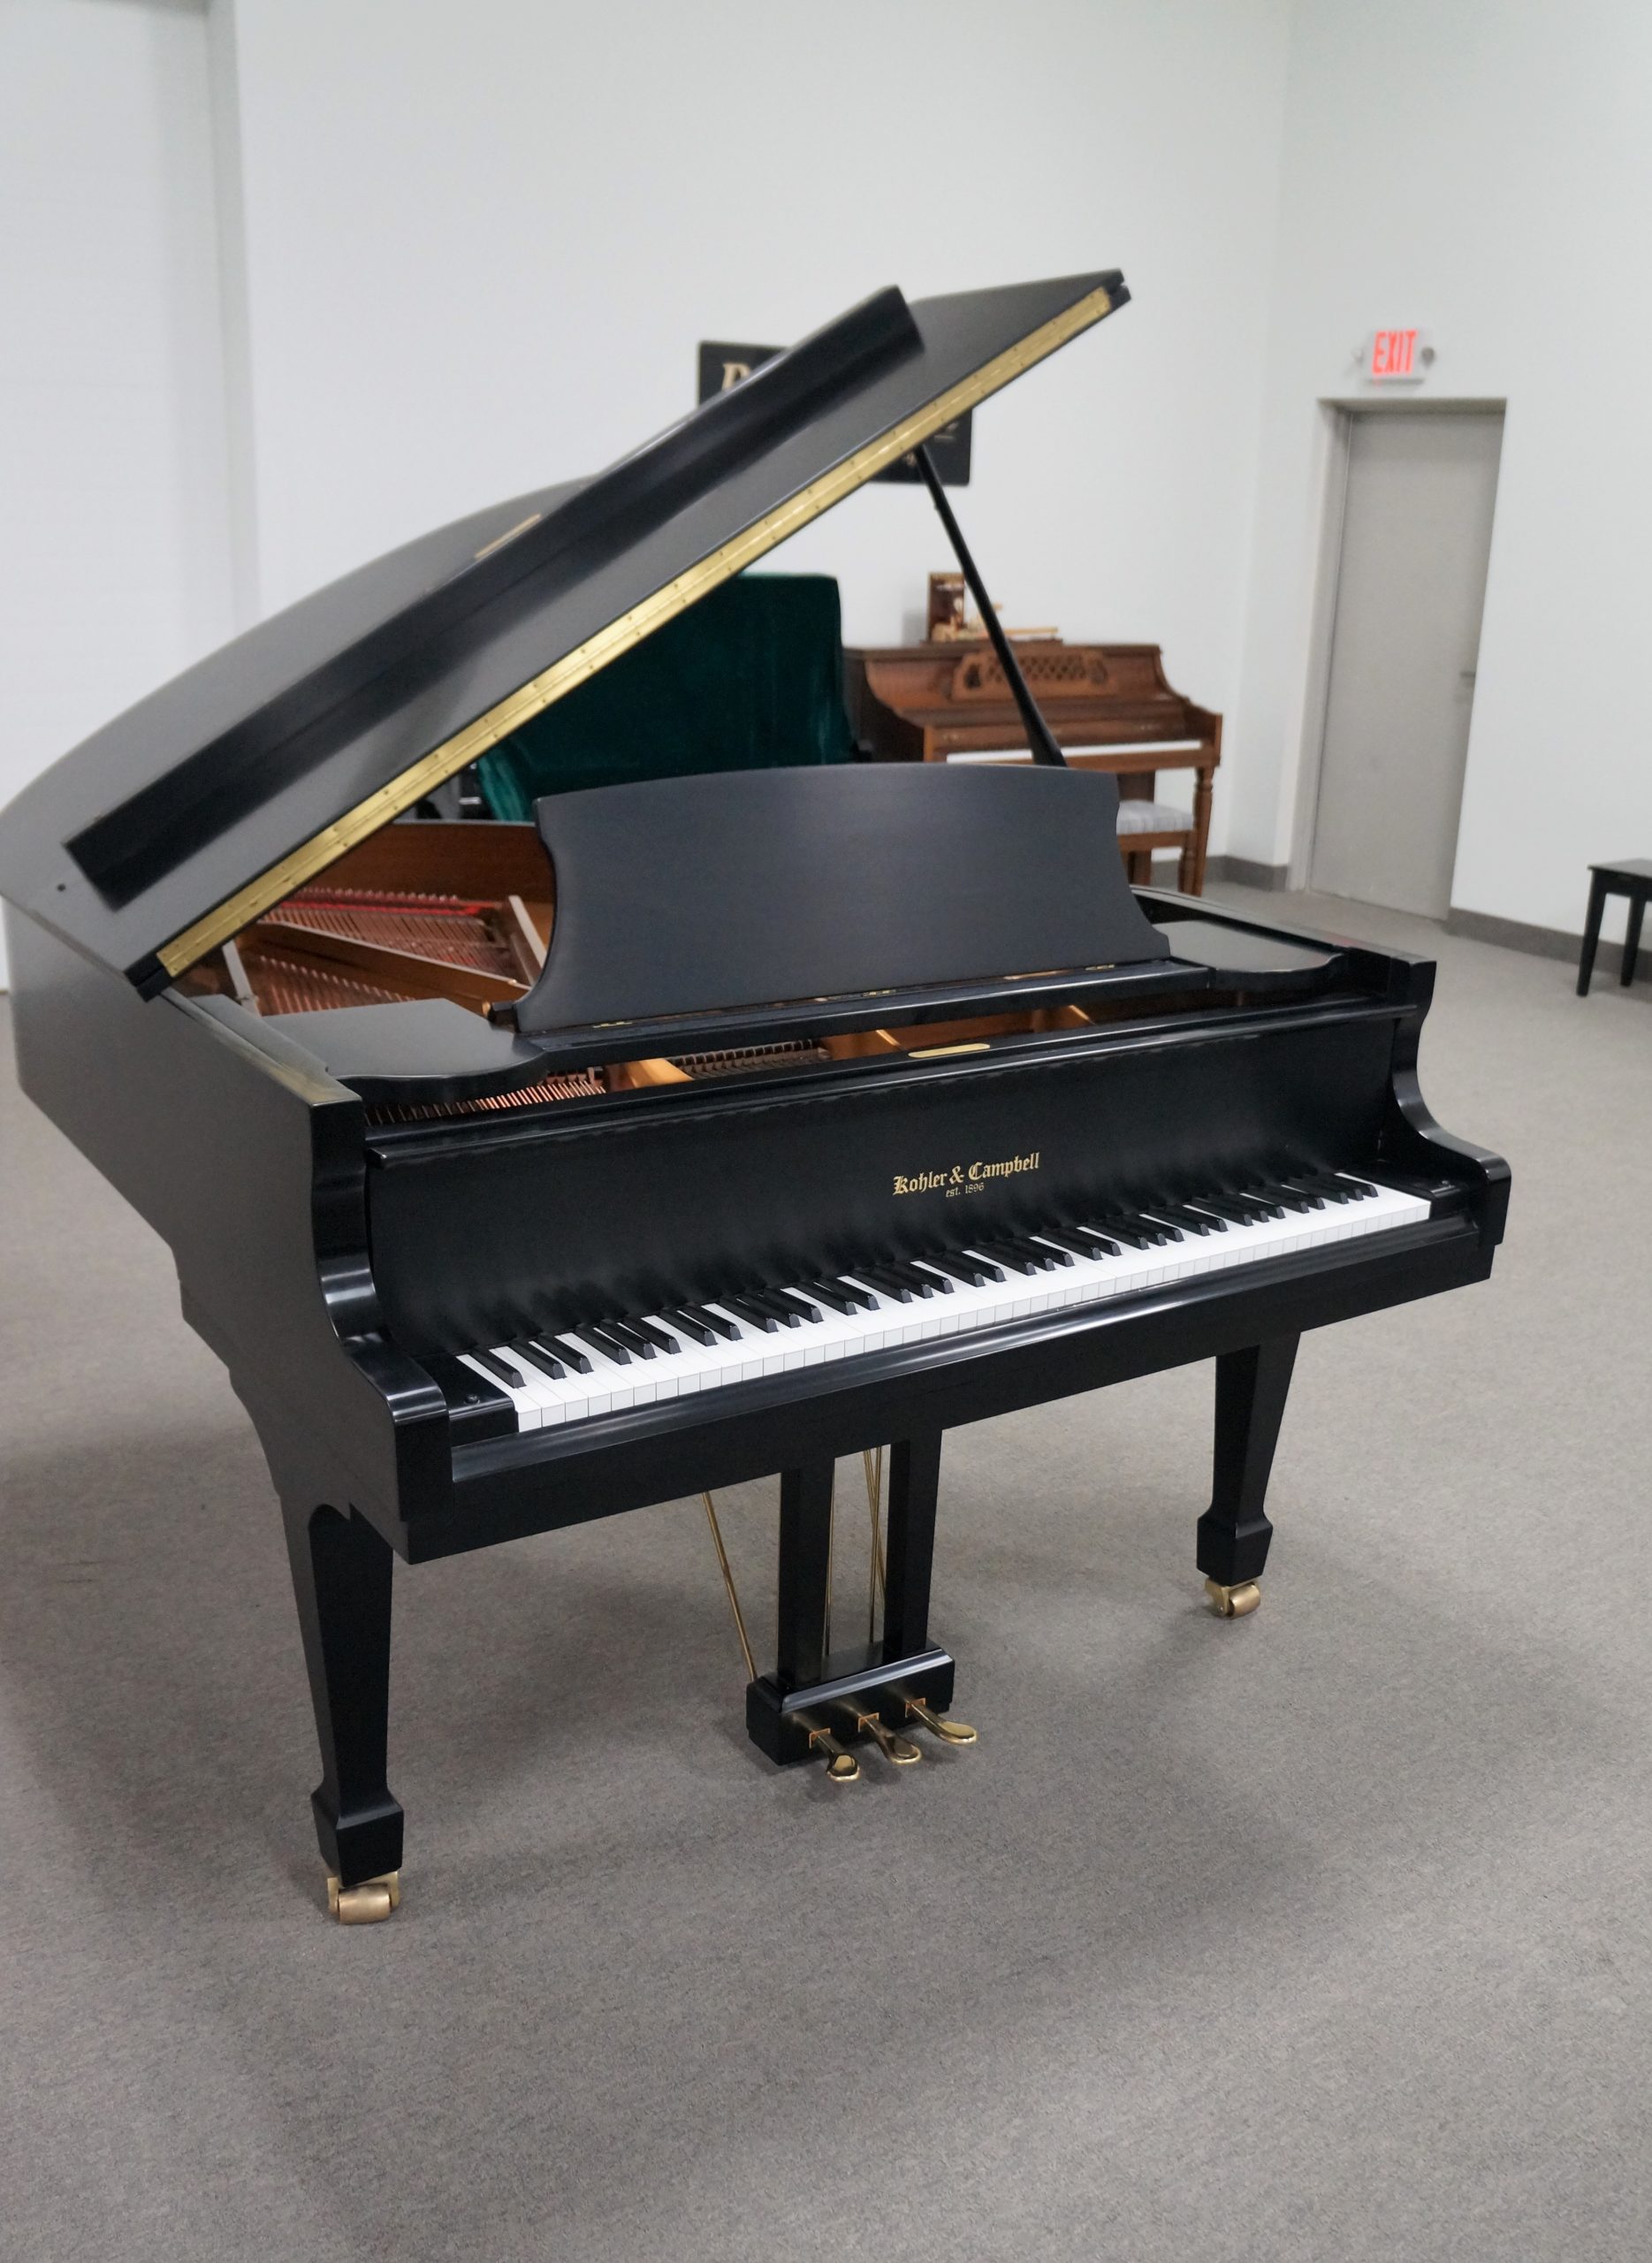 Kohler & Campbell Grand Piano Skg600s Black Satin